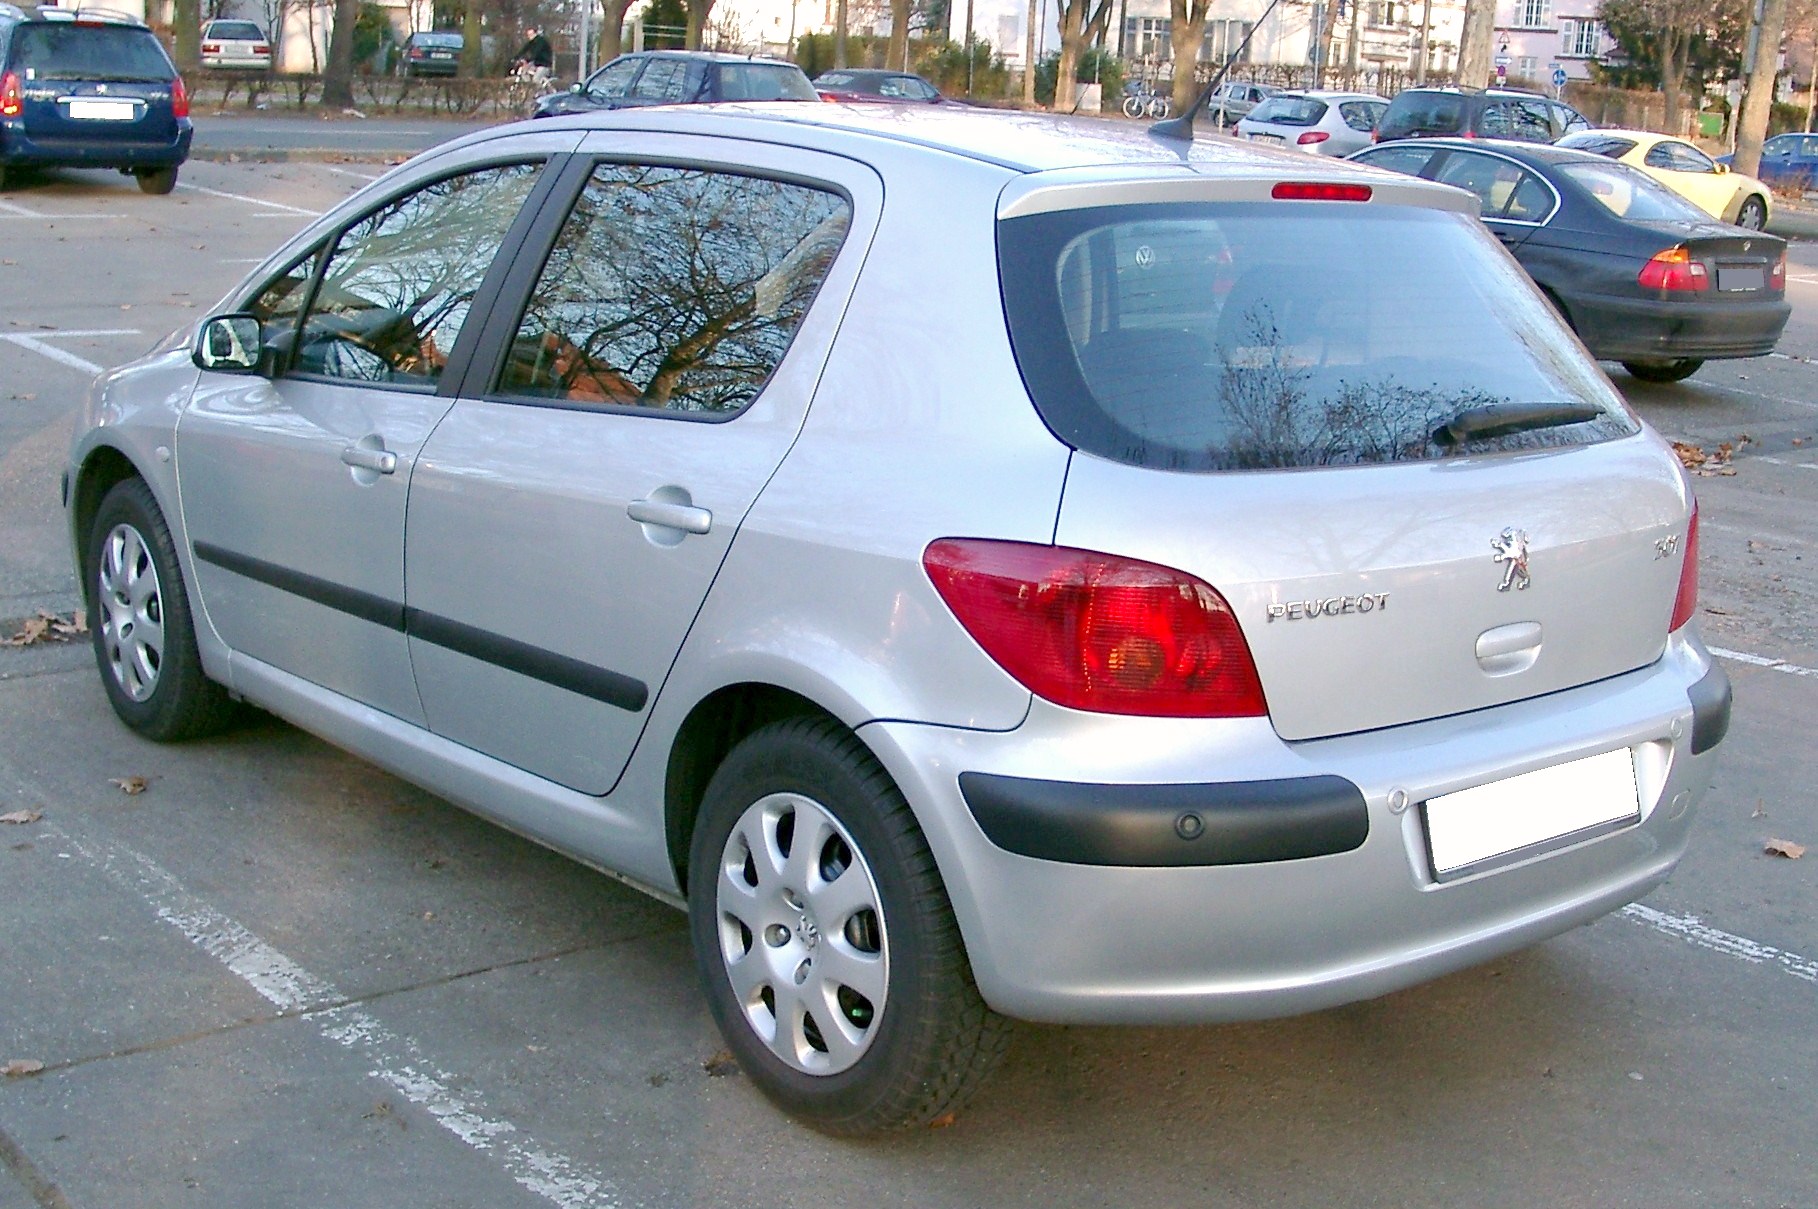 https://upload.wikimedia.org/wikipedia/commons/b/bc/Peugeot_307_rear_20071217.jpg